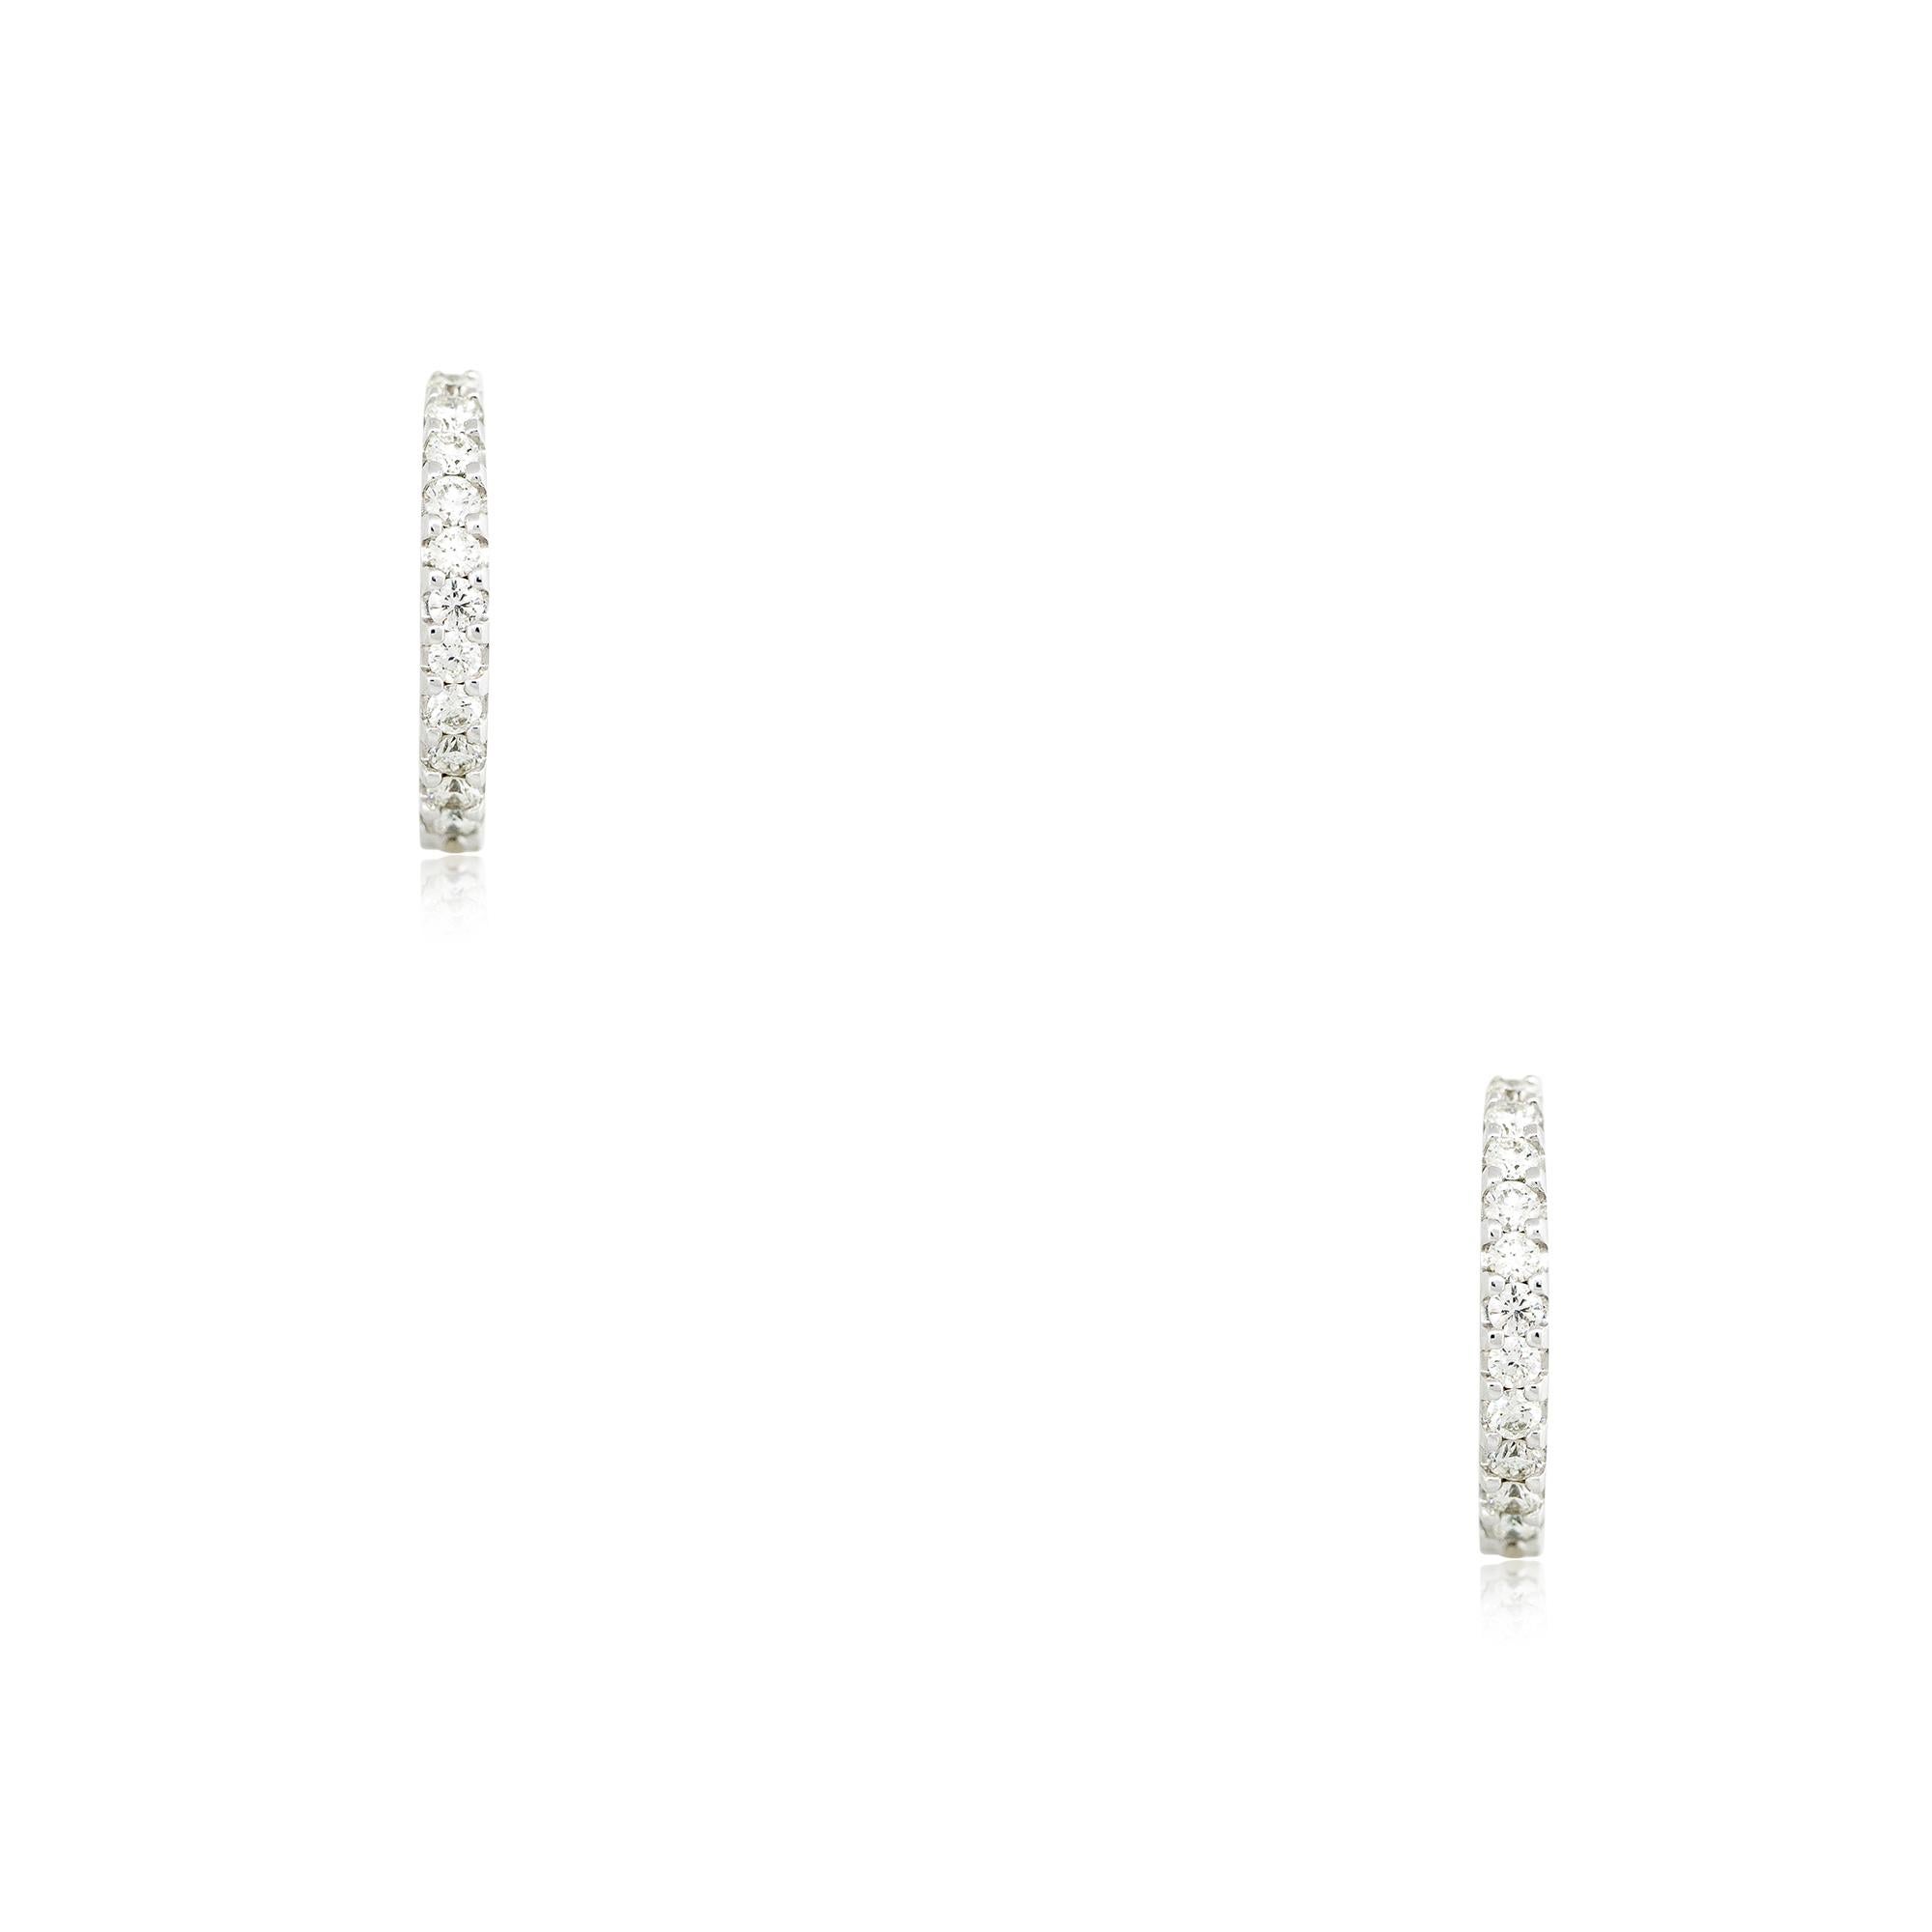 14k White Gold 0.36ctw Small Round Brilliant Diamond Hoop Earrings
Material: 14k White Gold
Diamond Details: Diamonds are approximately 0.36ctw of Round Brilliant cut Diamonds. There are 11 stones in each earring. Diamonds are approximately G/H in